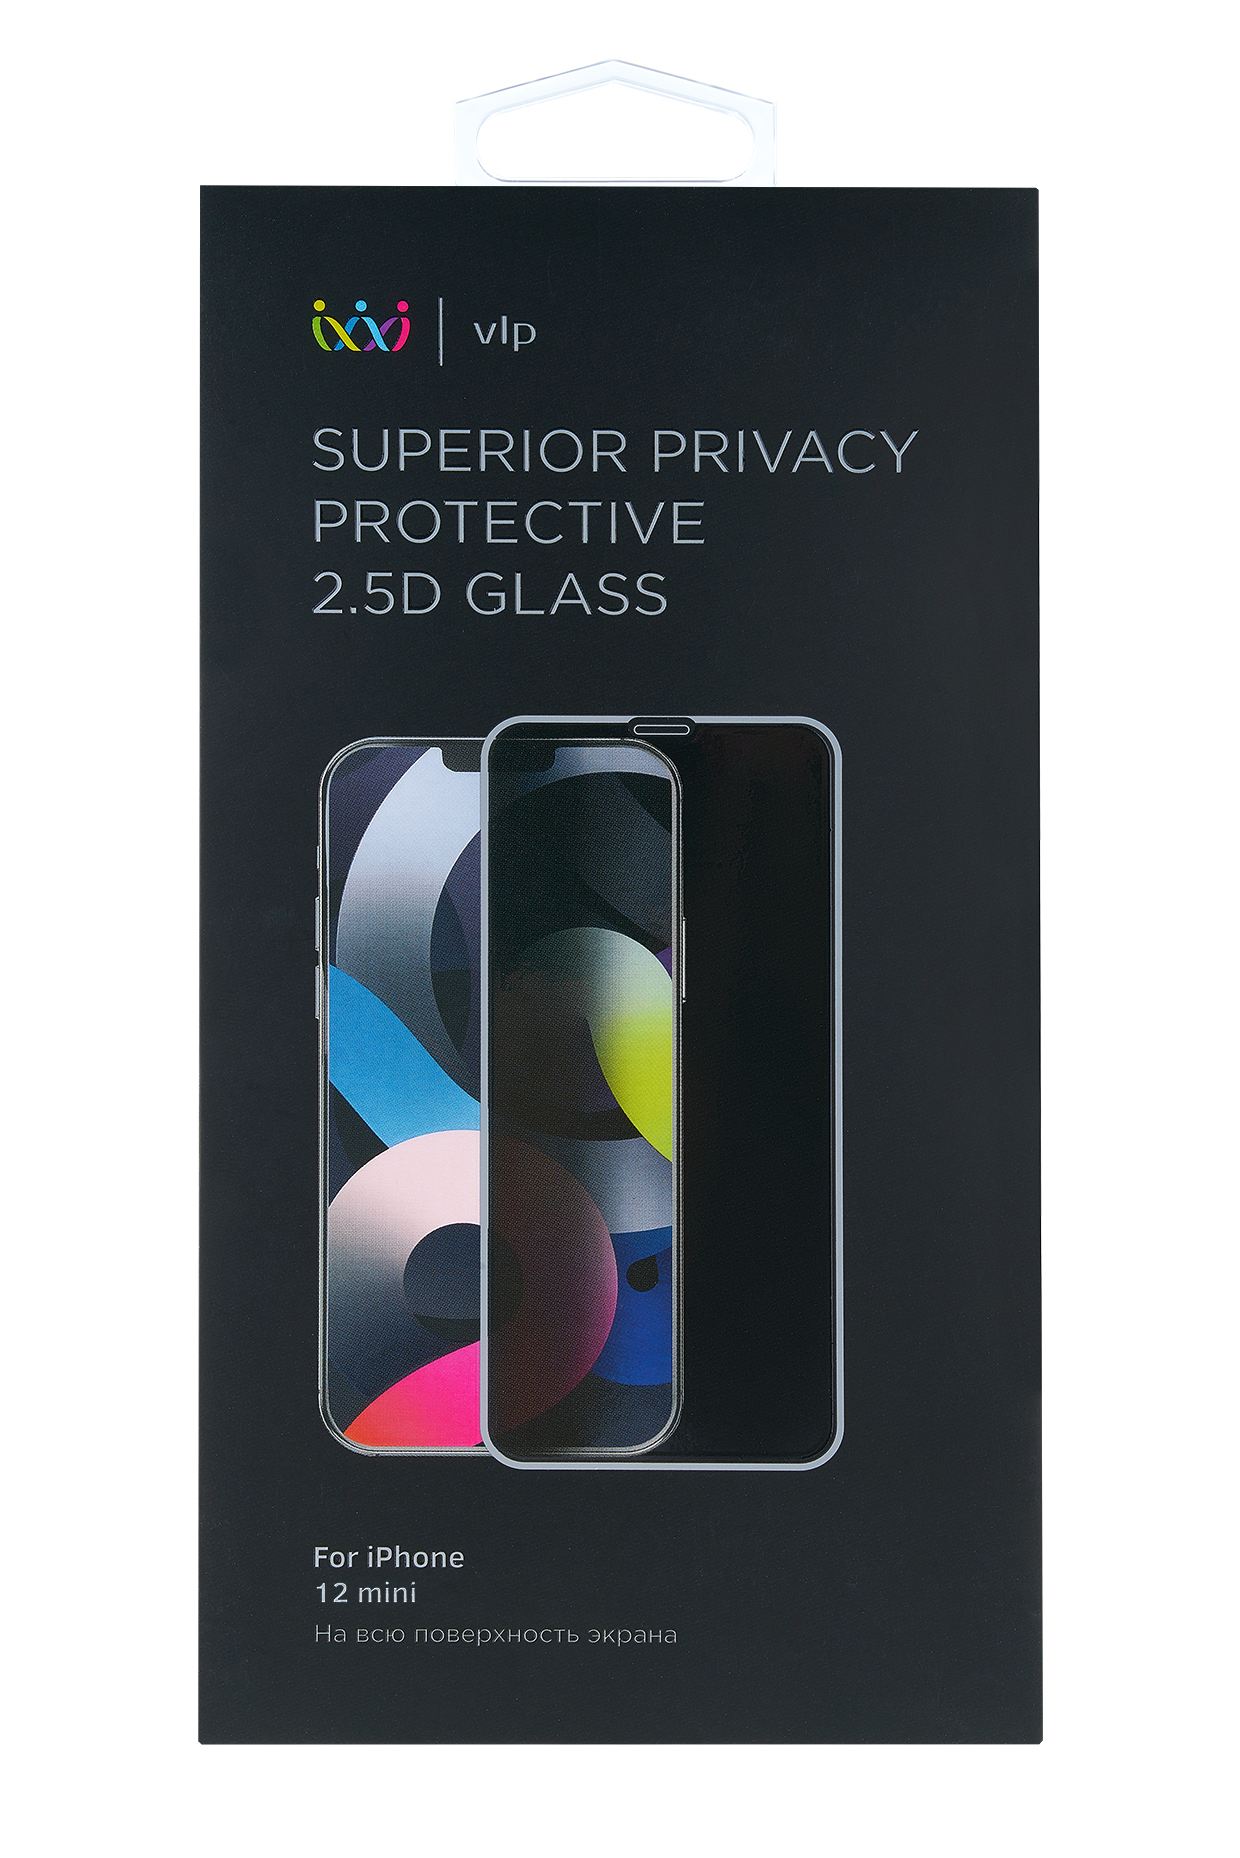 Стекло 2.5D защитное VLP Privacy для iPhone 12 mini, черная рамка защитное стекло deppa privacy 3d iphone xr 11 черная рамка 62599